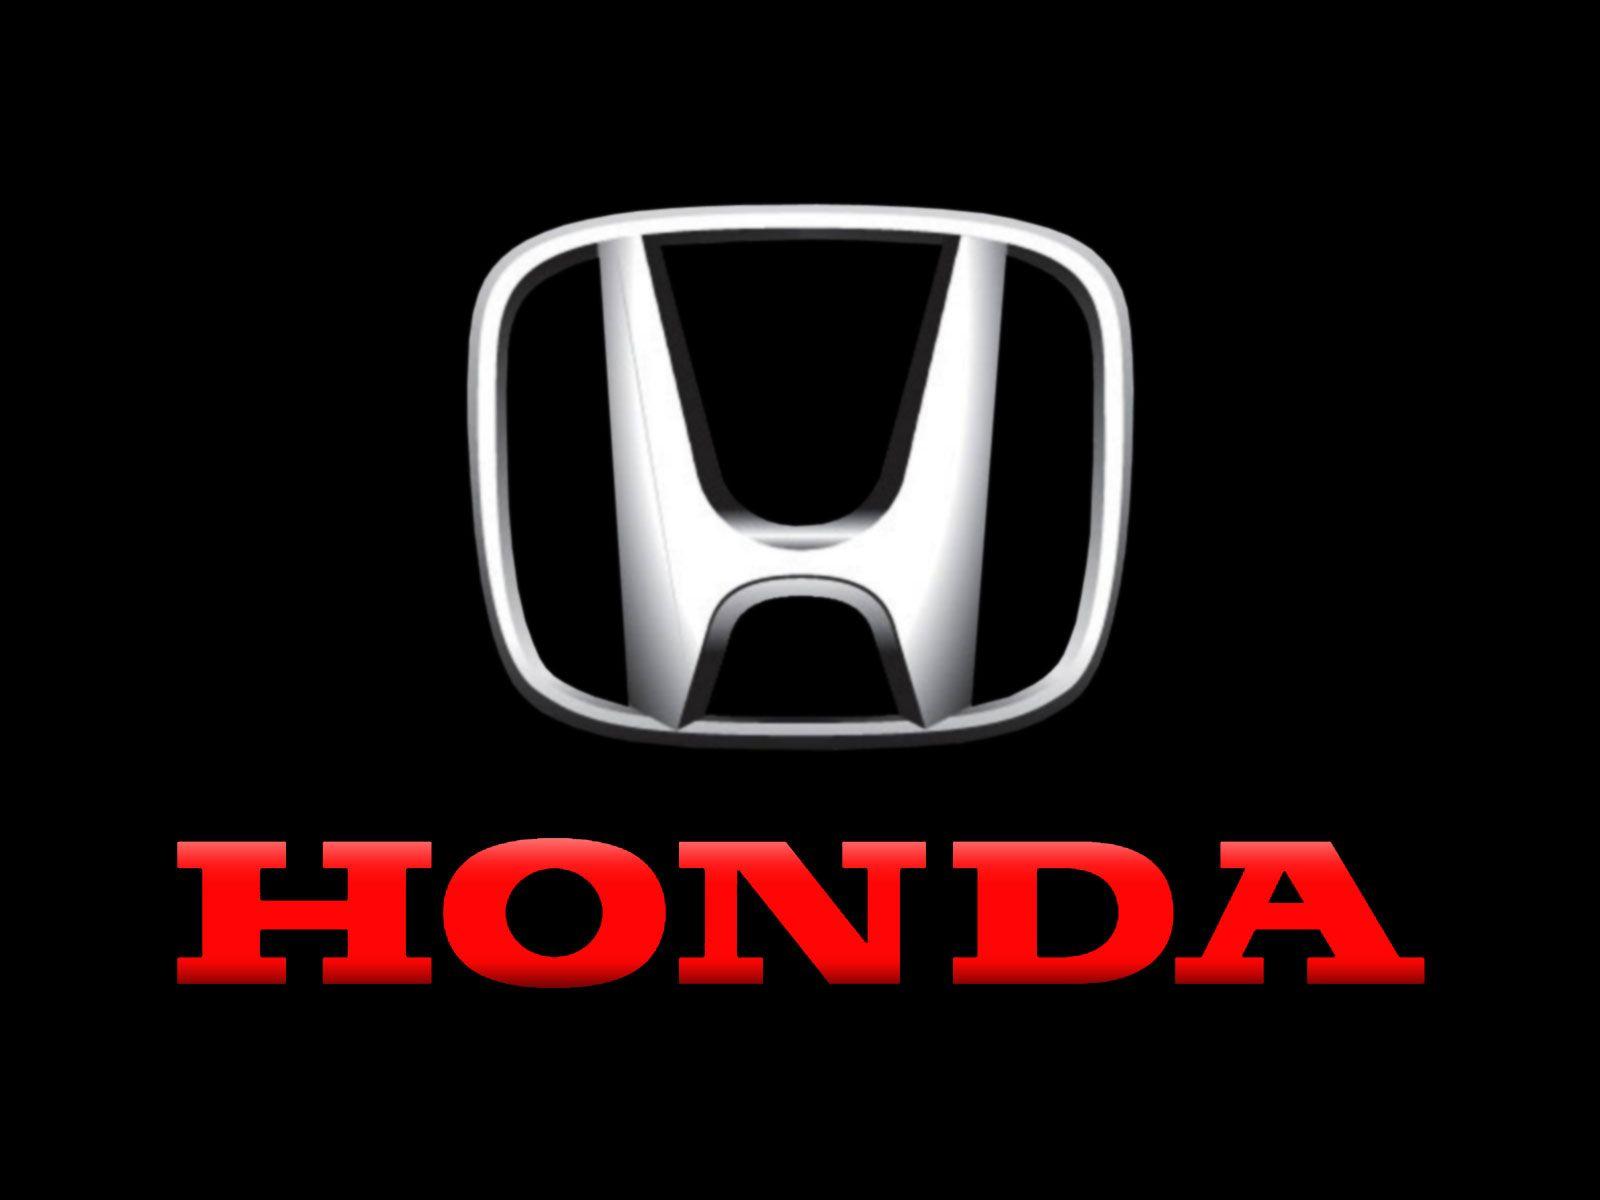 American Automotive Company Ka Logo - Honda Logo, Honda Car Symbol Meaning and History. Car Brand Names.com